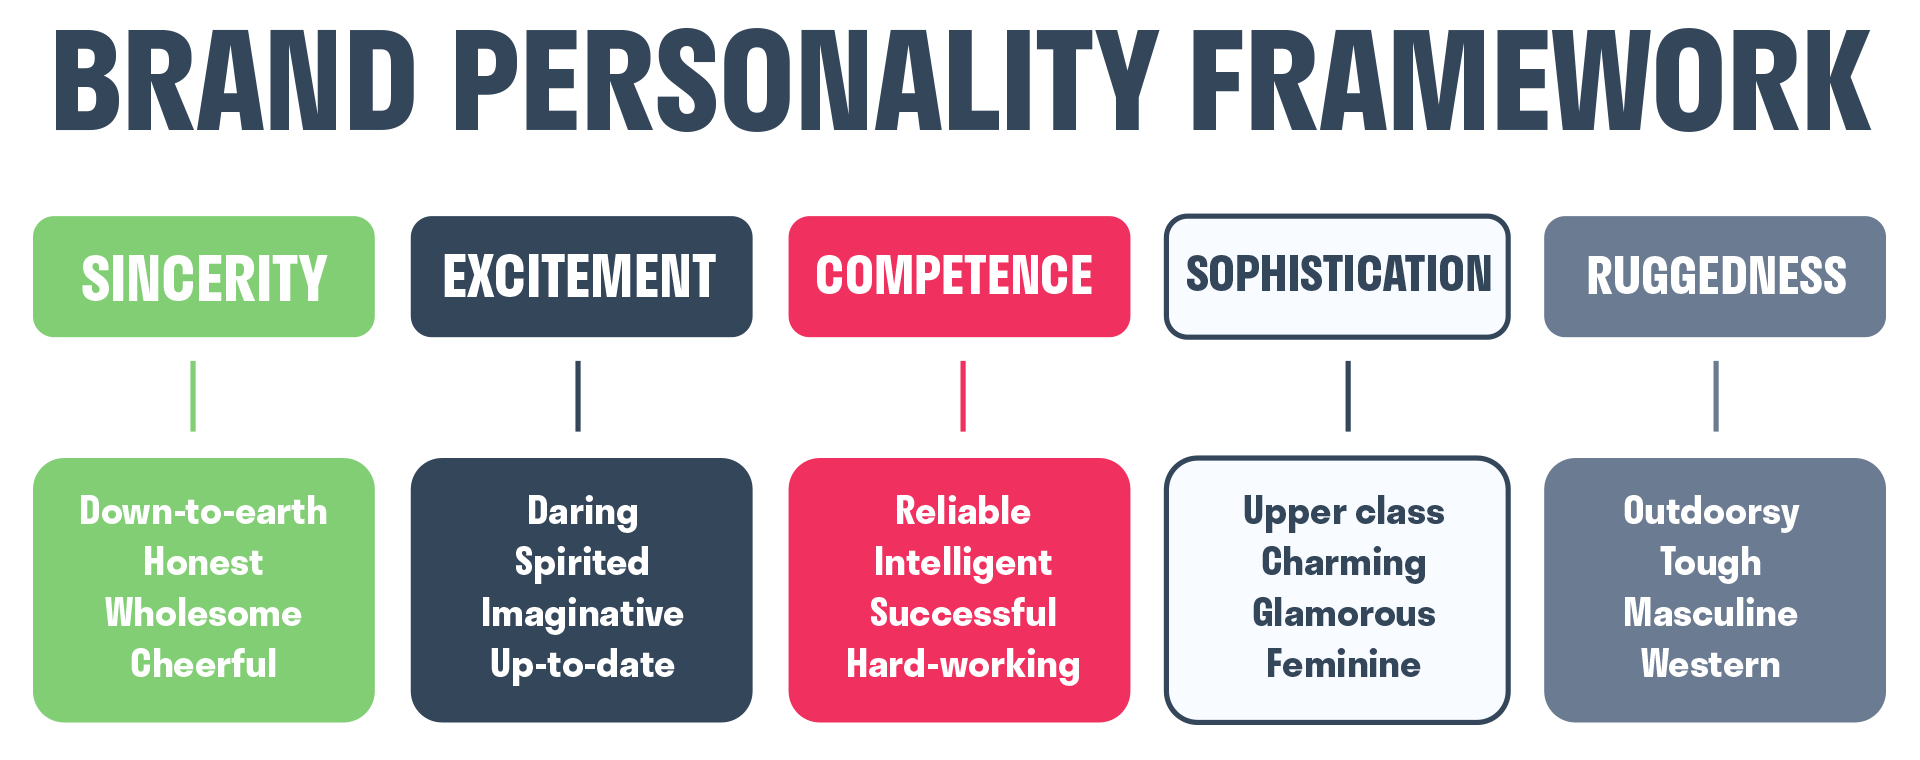 Brand personality framework 